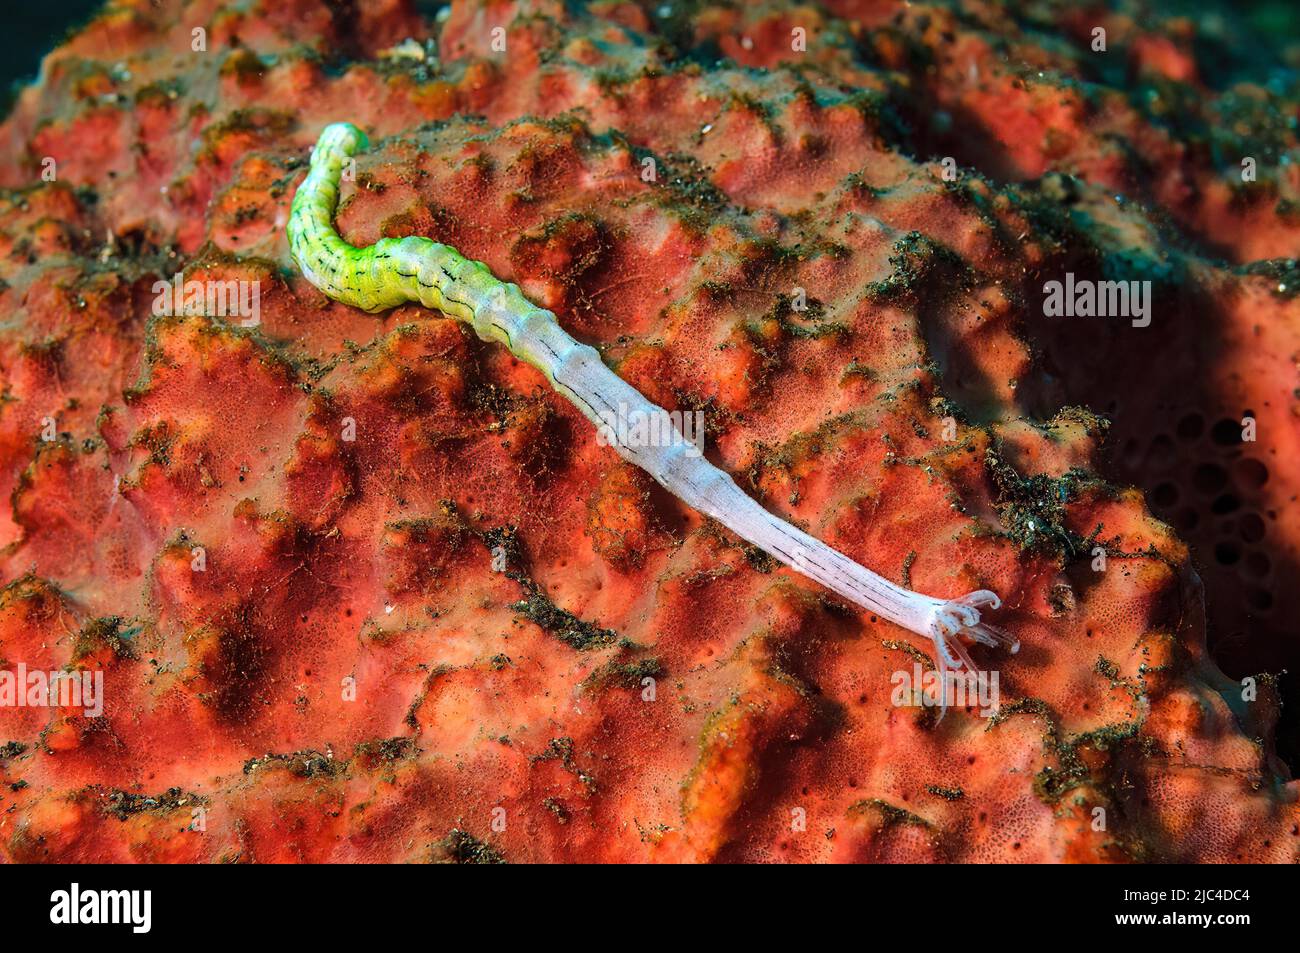 Worm sea cucumber (Synaptula lamperti) crawls over red sponge, Pacific Ocean, Bali, Indonesia Stock Photo